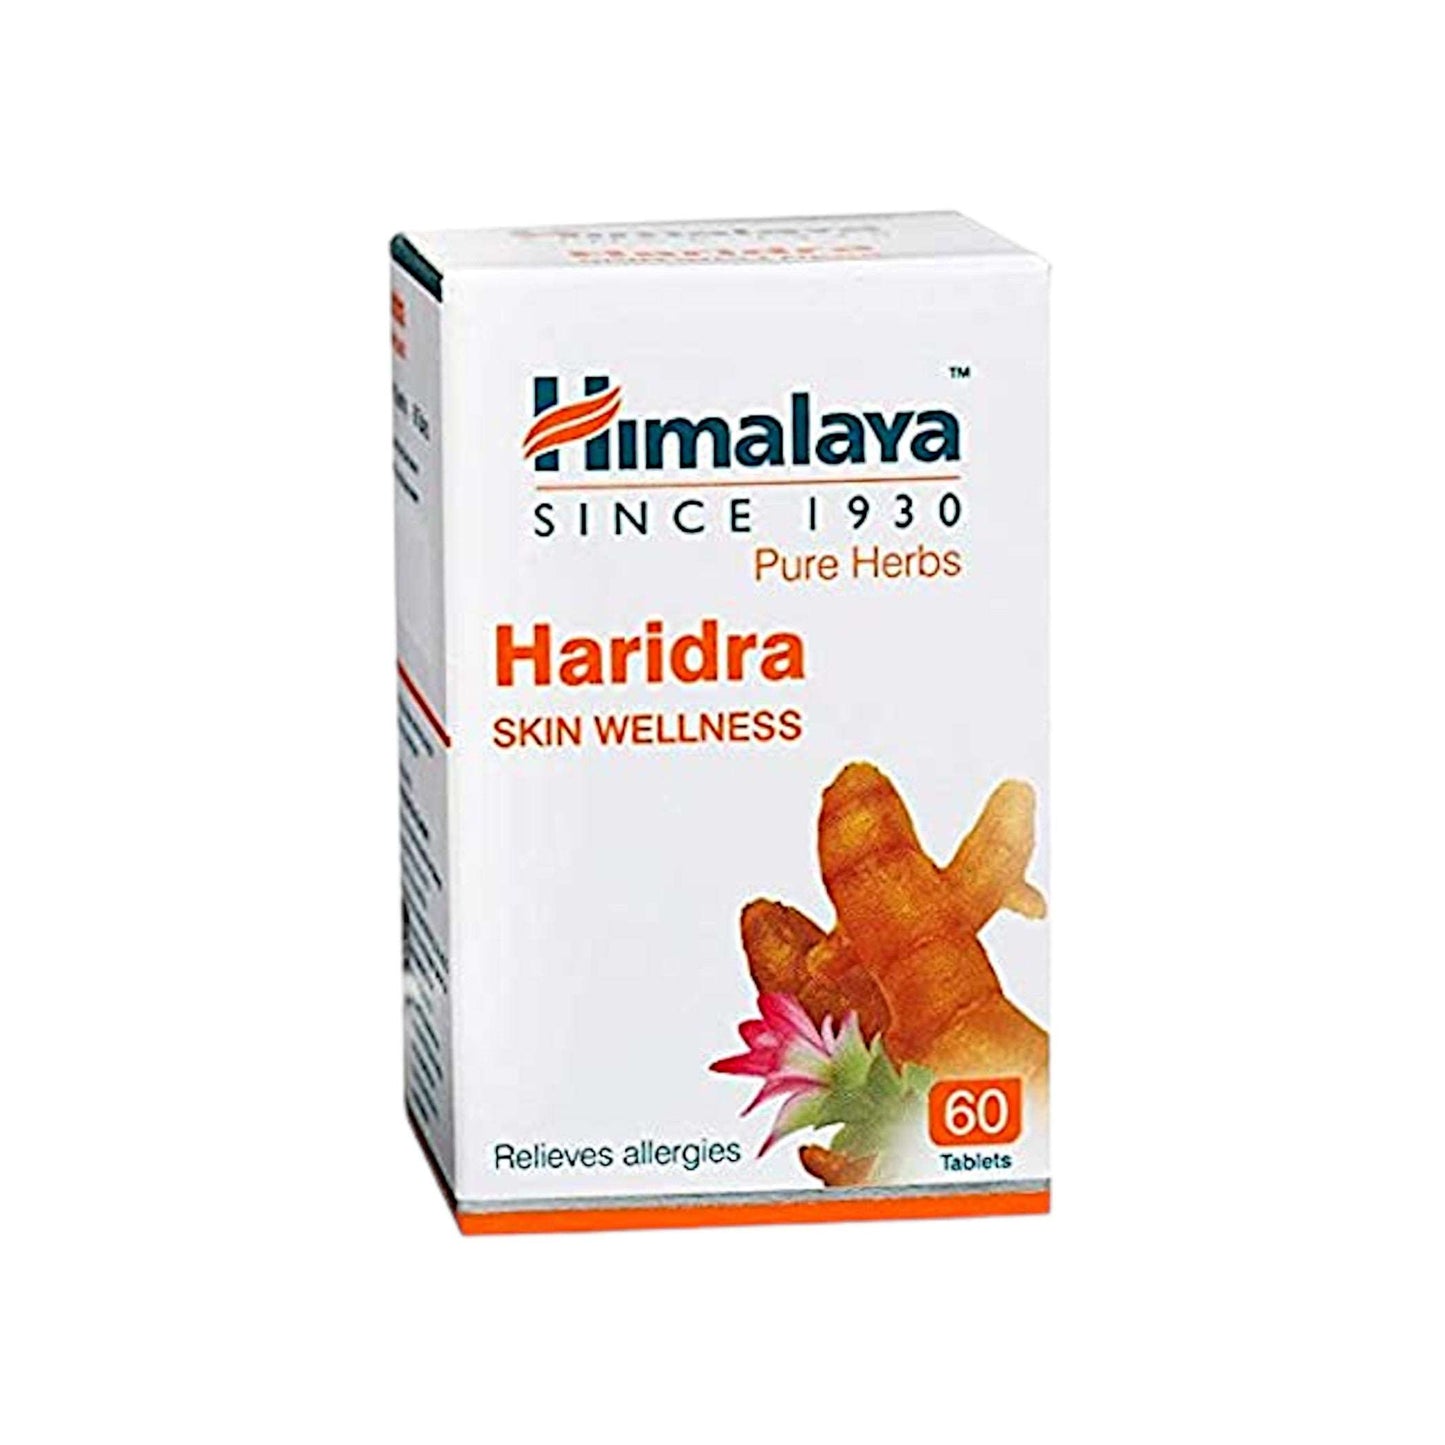 Image: Himalaya Herbals Haridra 60 Tablets: Turmeric-based tablets with anti-inflammatory and healing properties.